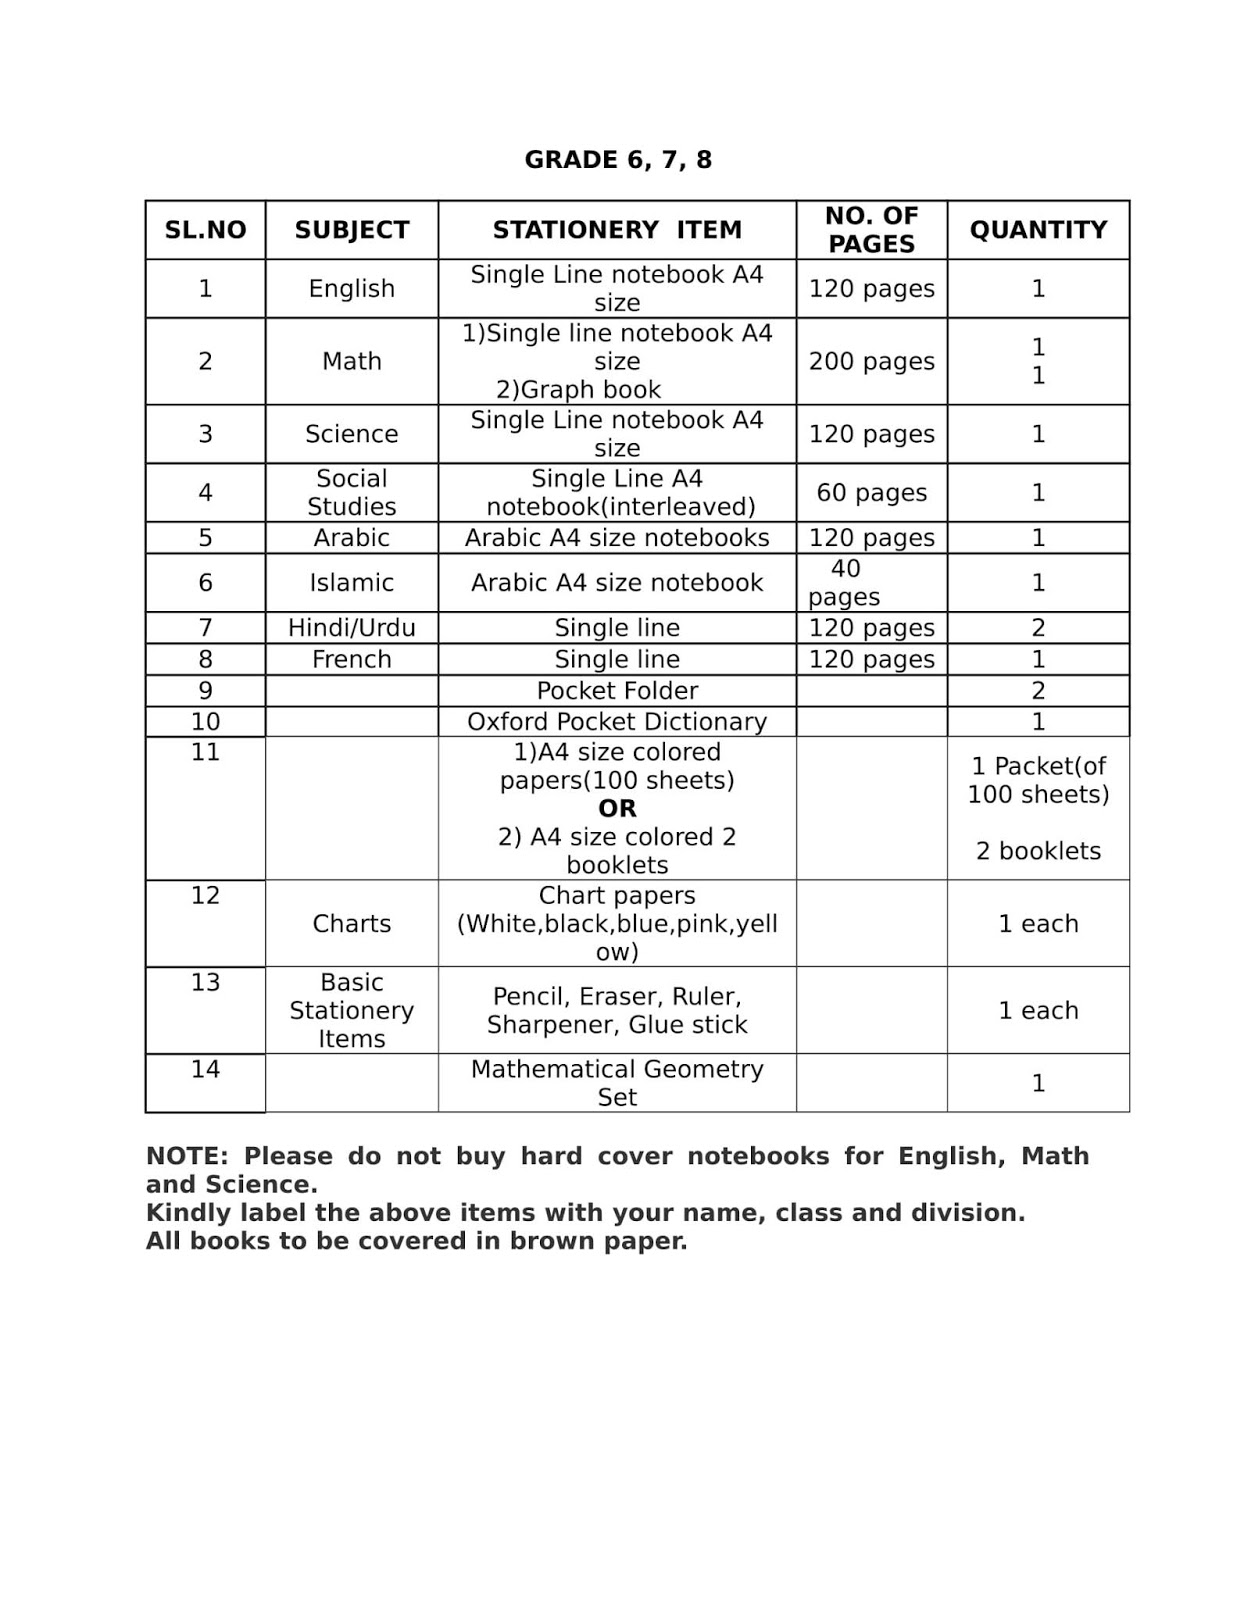 Birla World School Oman Stationery list for Grade 6,7,8